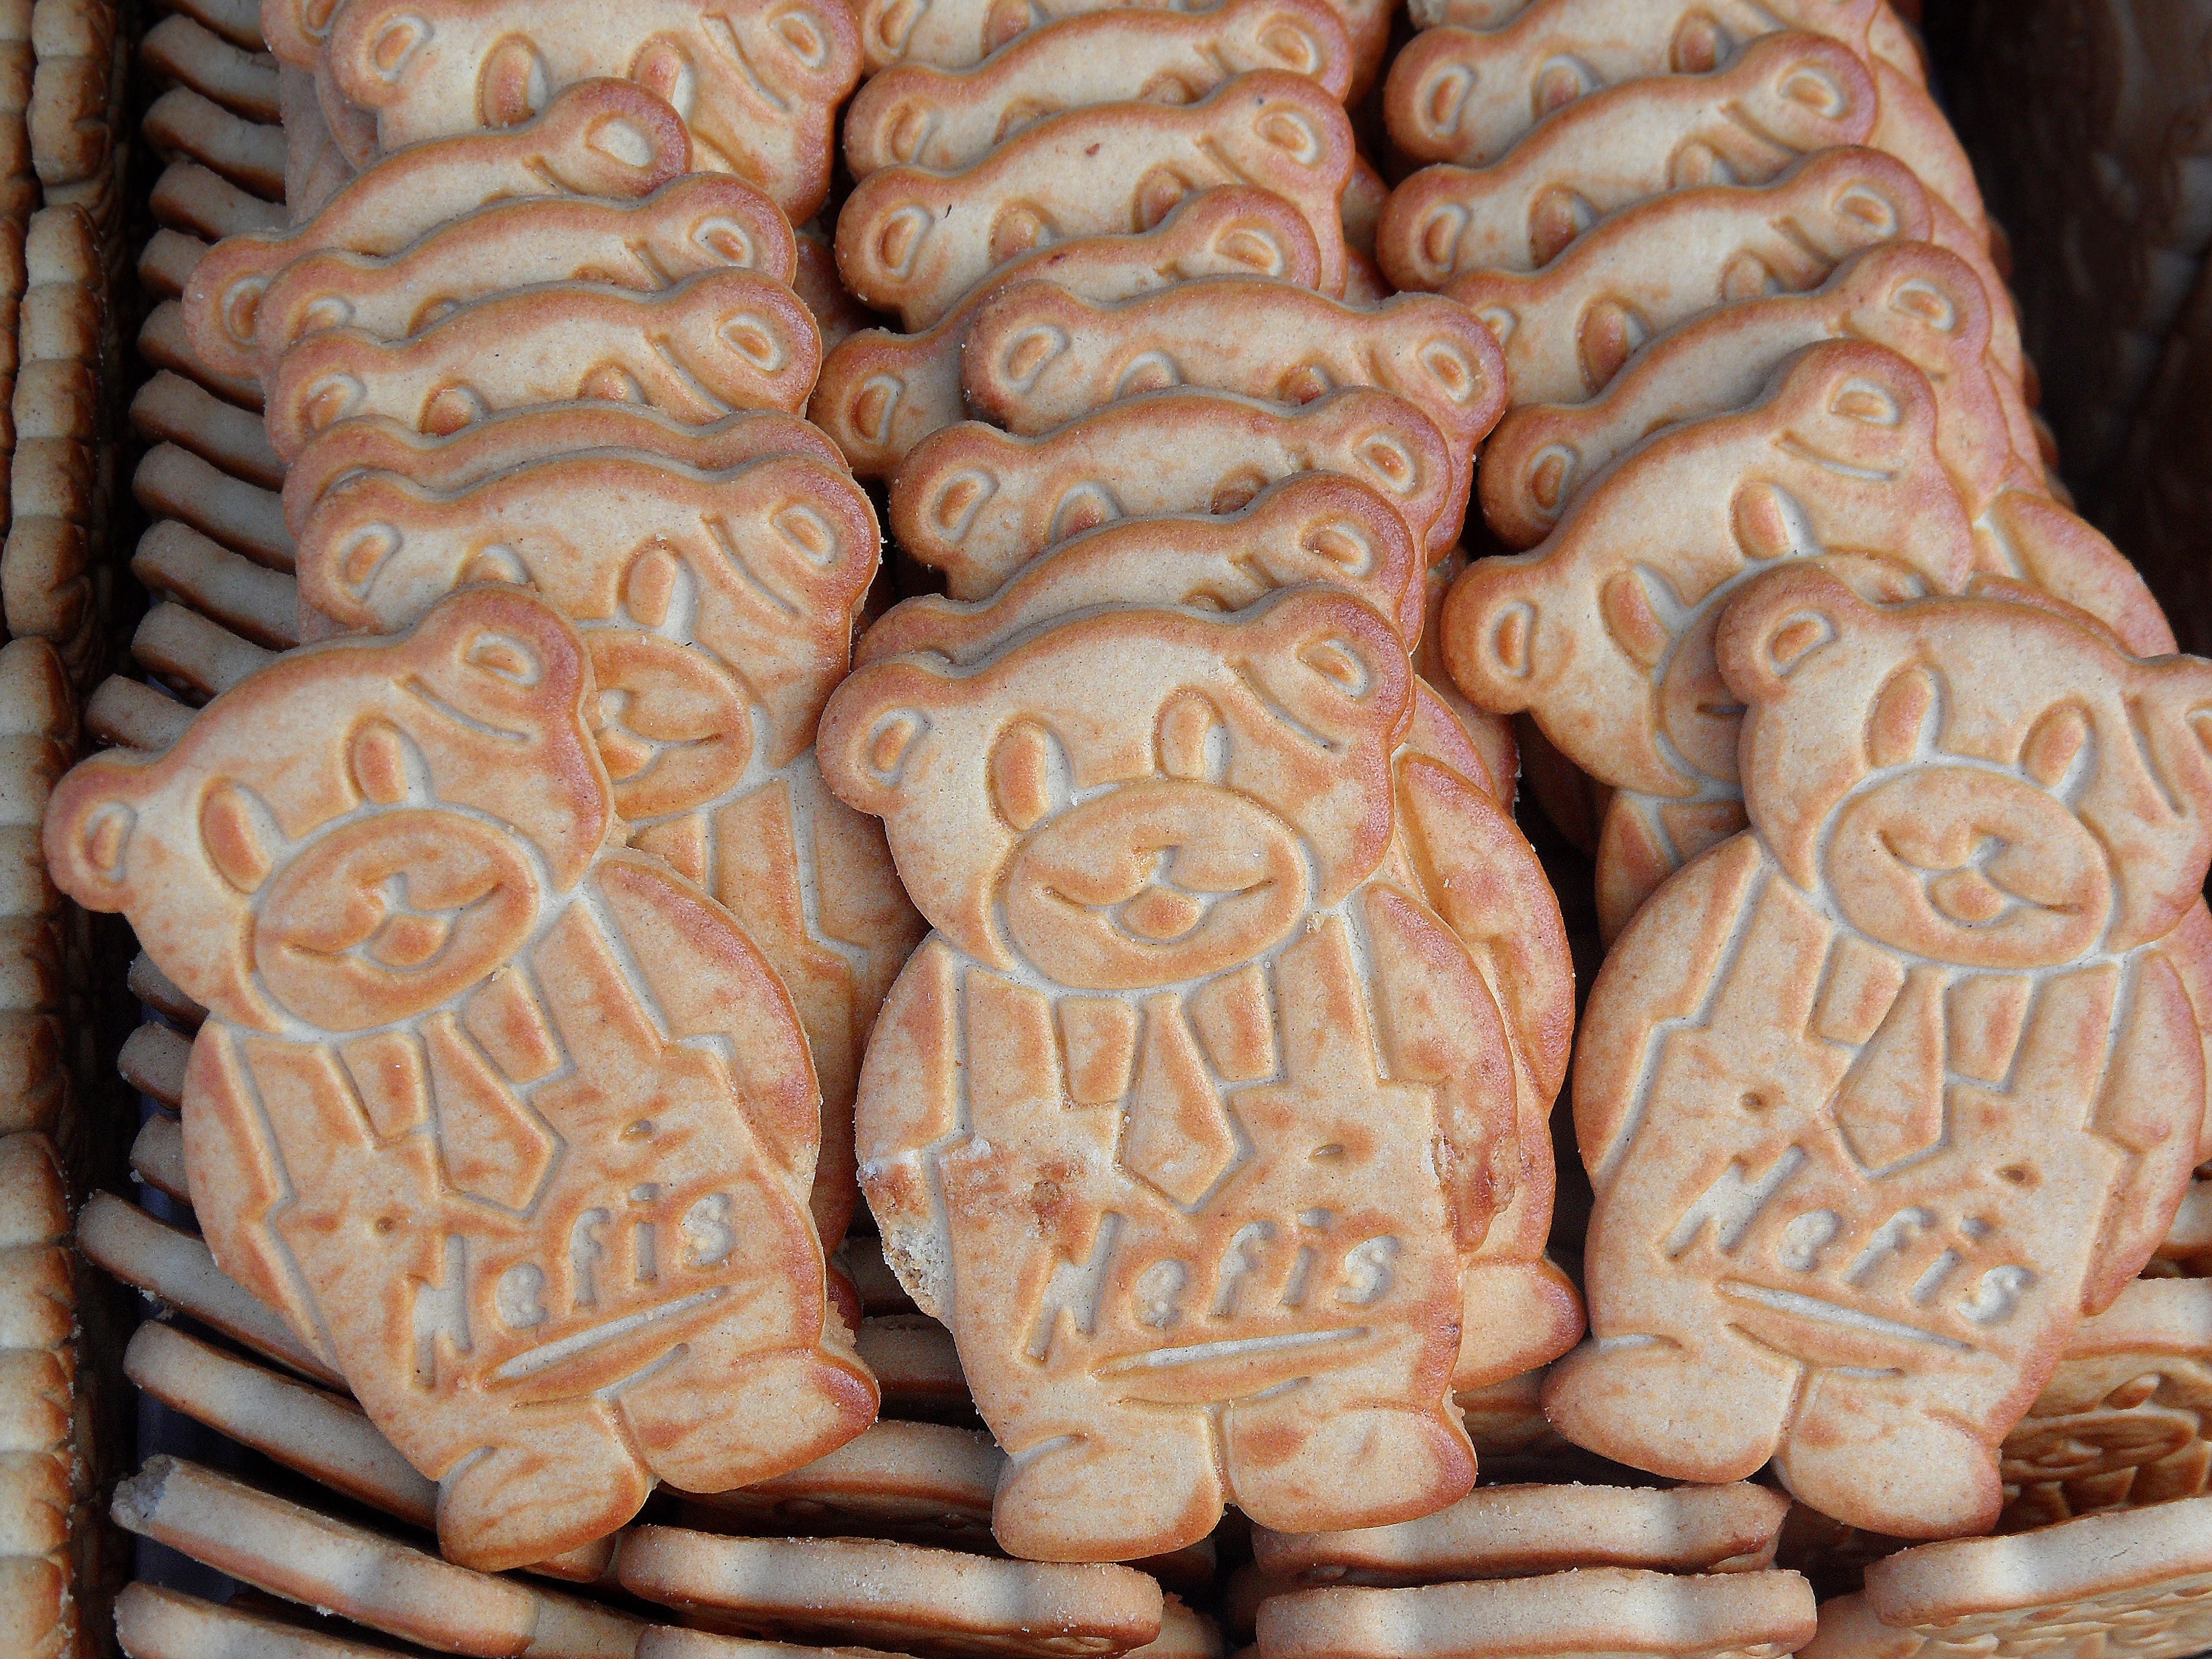 baked bear cookies lot